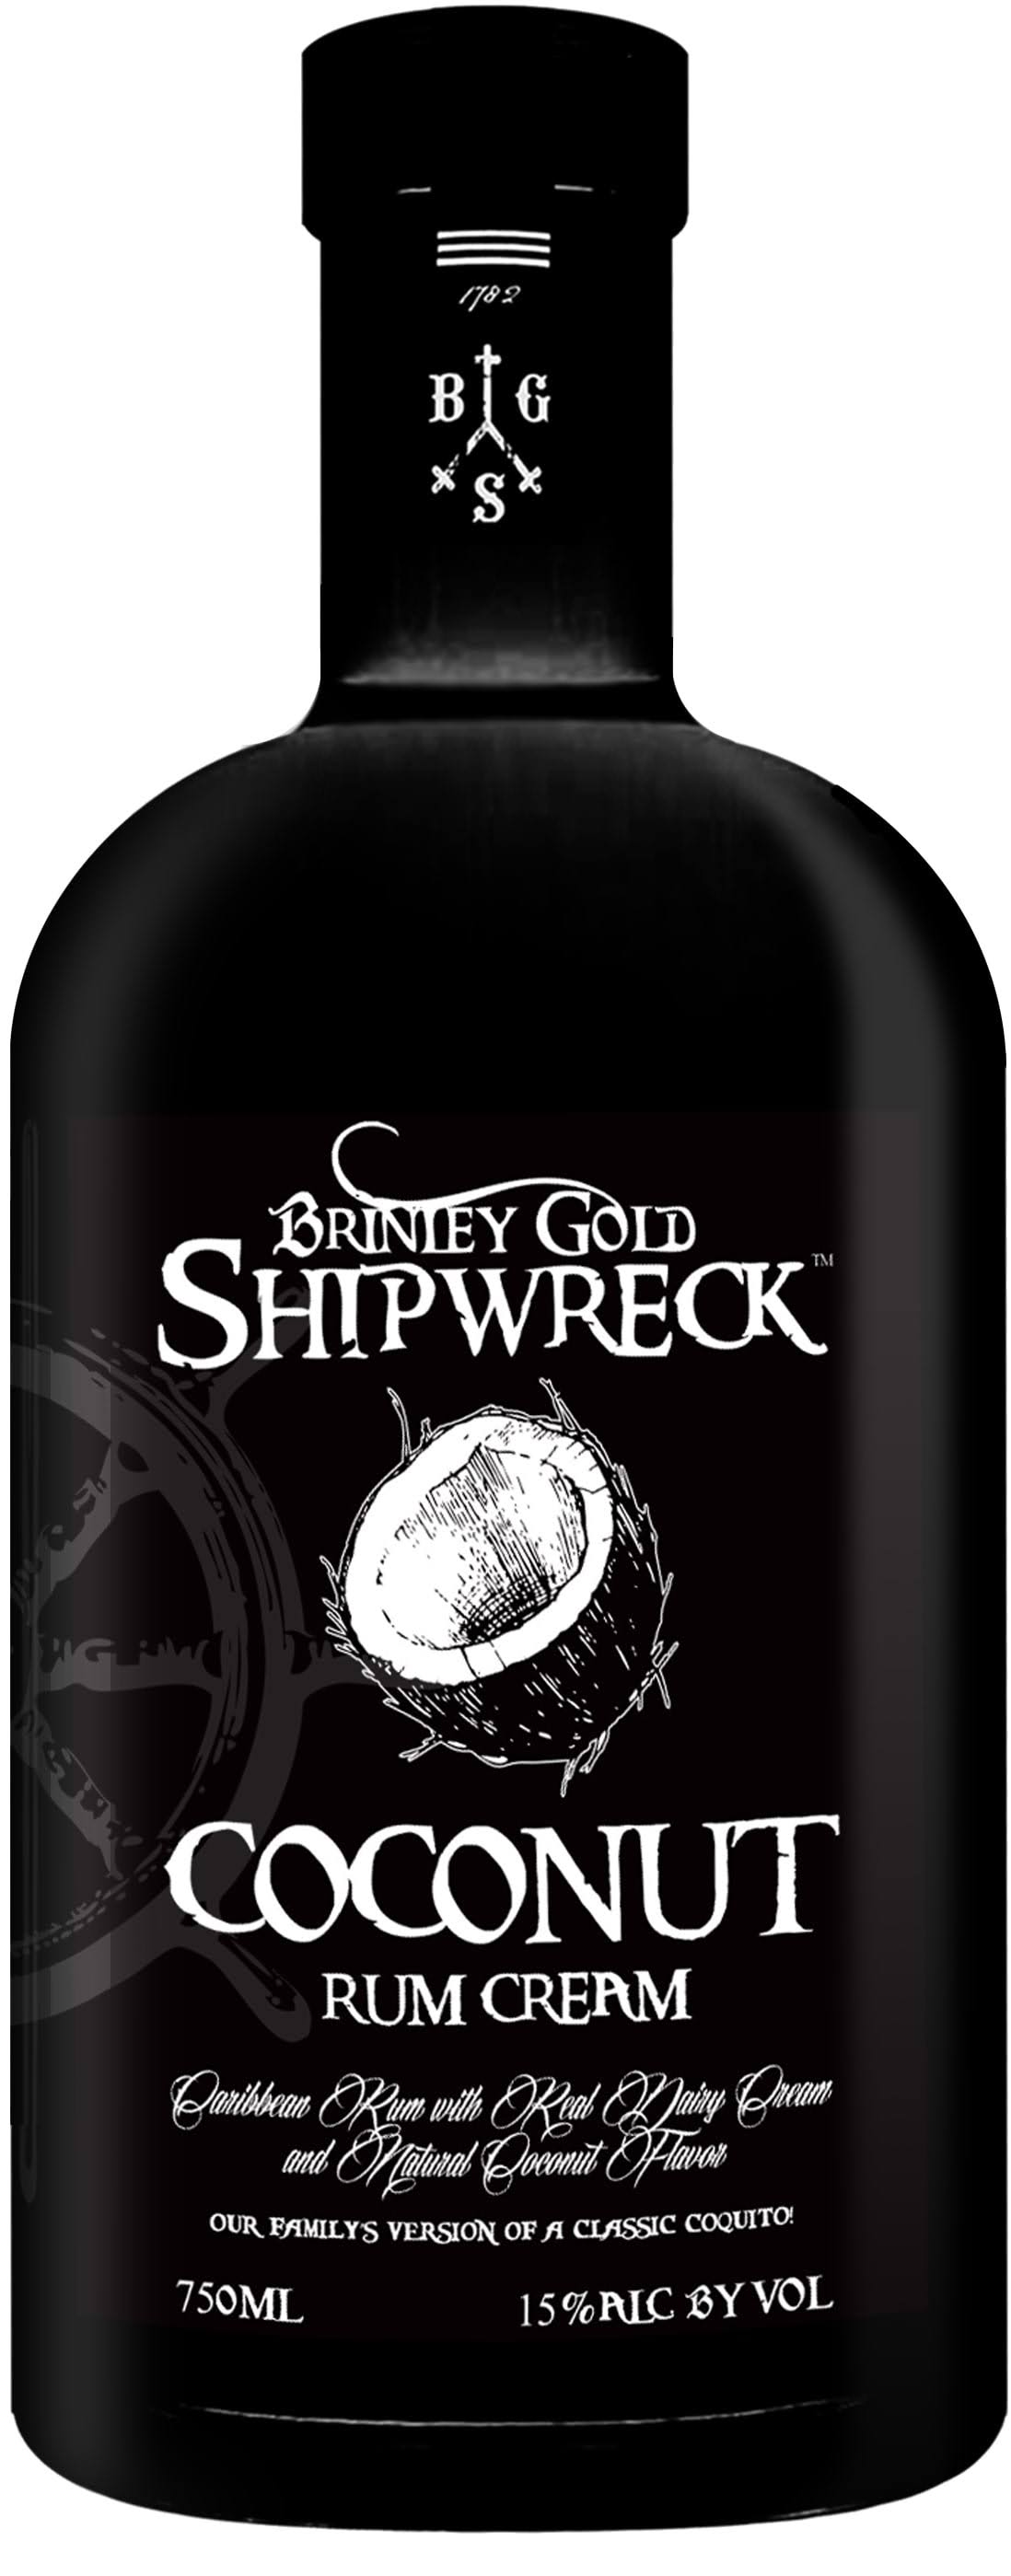 Brinley Gold Shipwreck Rum Coconut Cream - 750 ml bottle